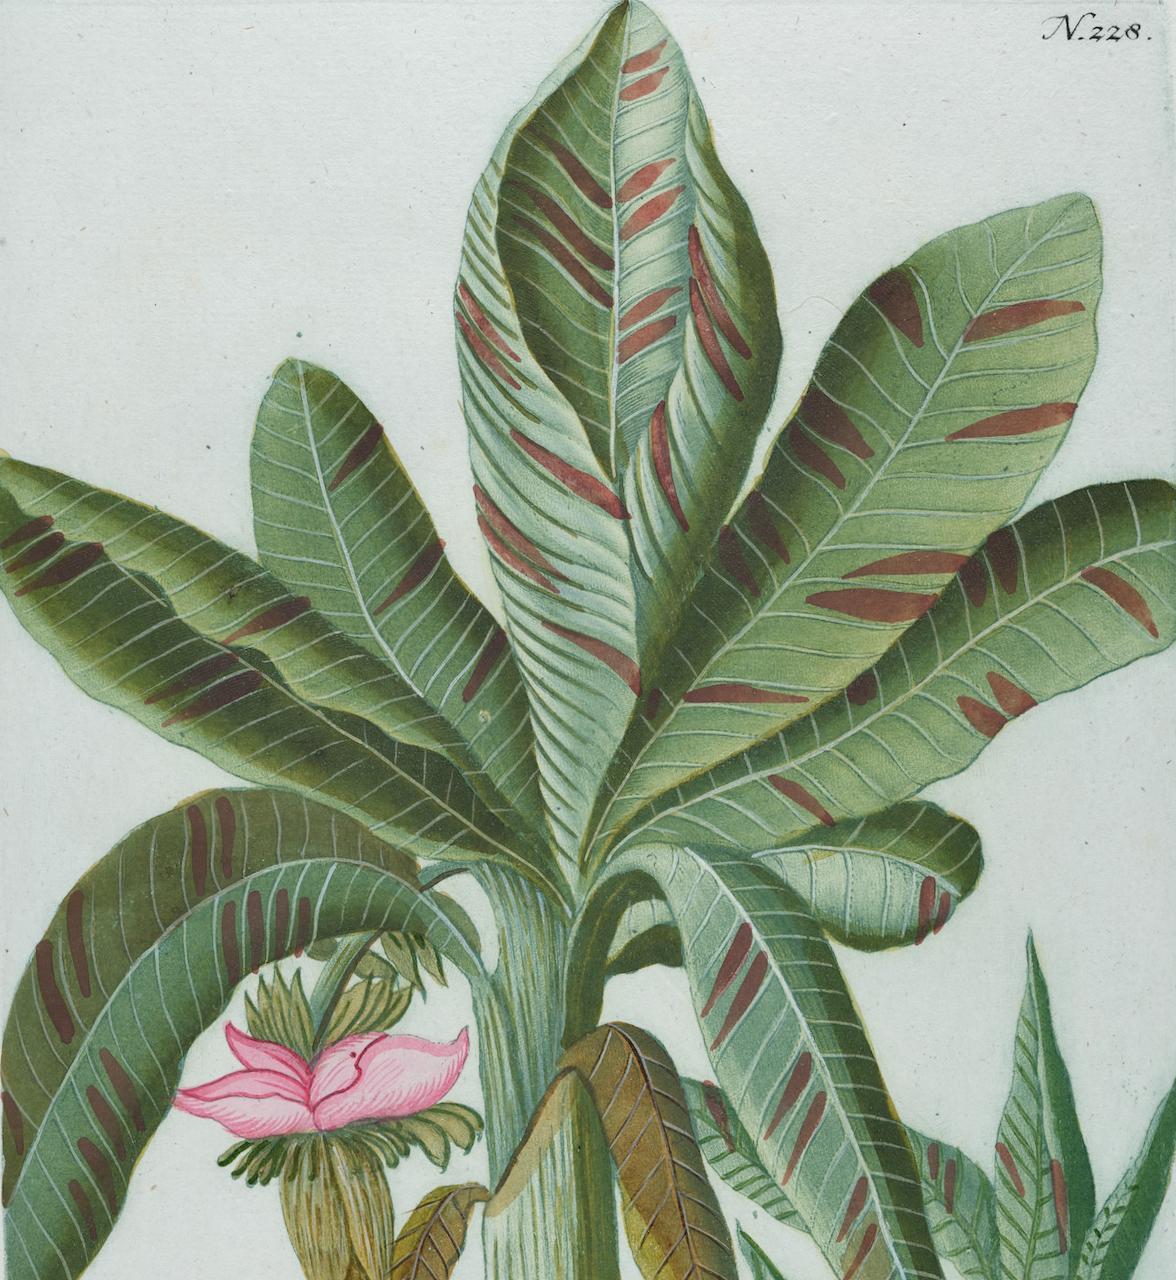 Banana Plant: An 18th Century Hand-colored Botanical Engraving by J. Weinmann - Naturalistic Print by Johann Wilhelm Weinmann